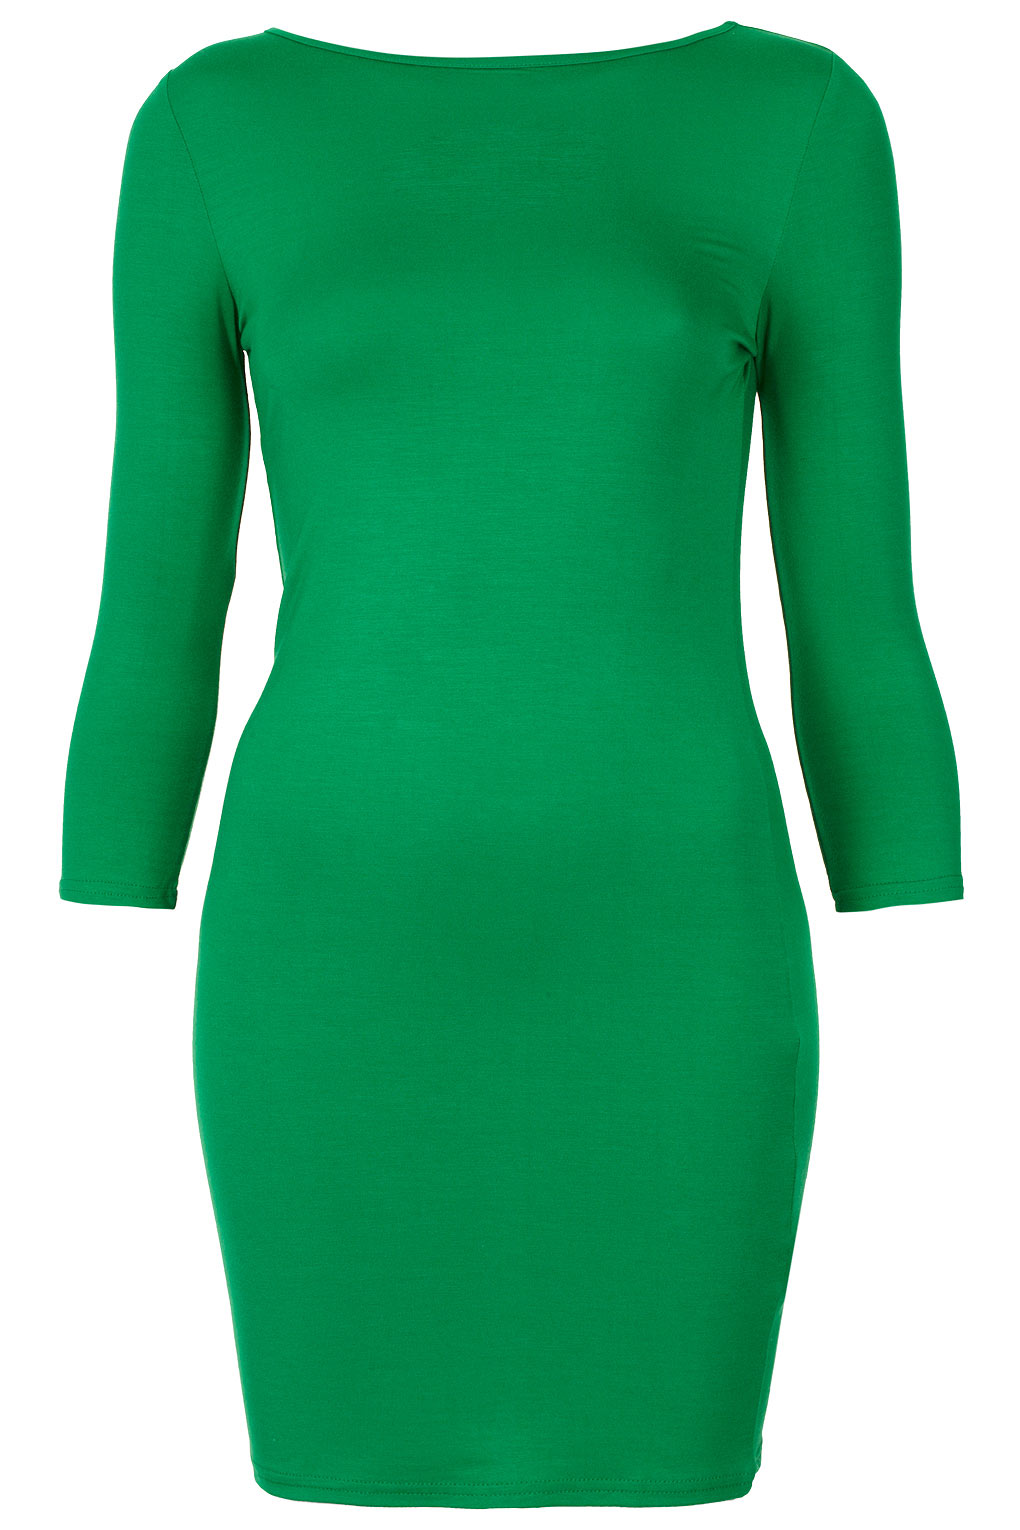 TOPSHOP Plain Short Bodycon Dress in Green - Lyst